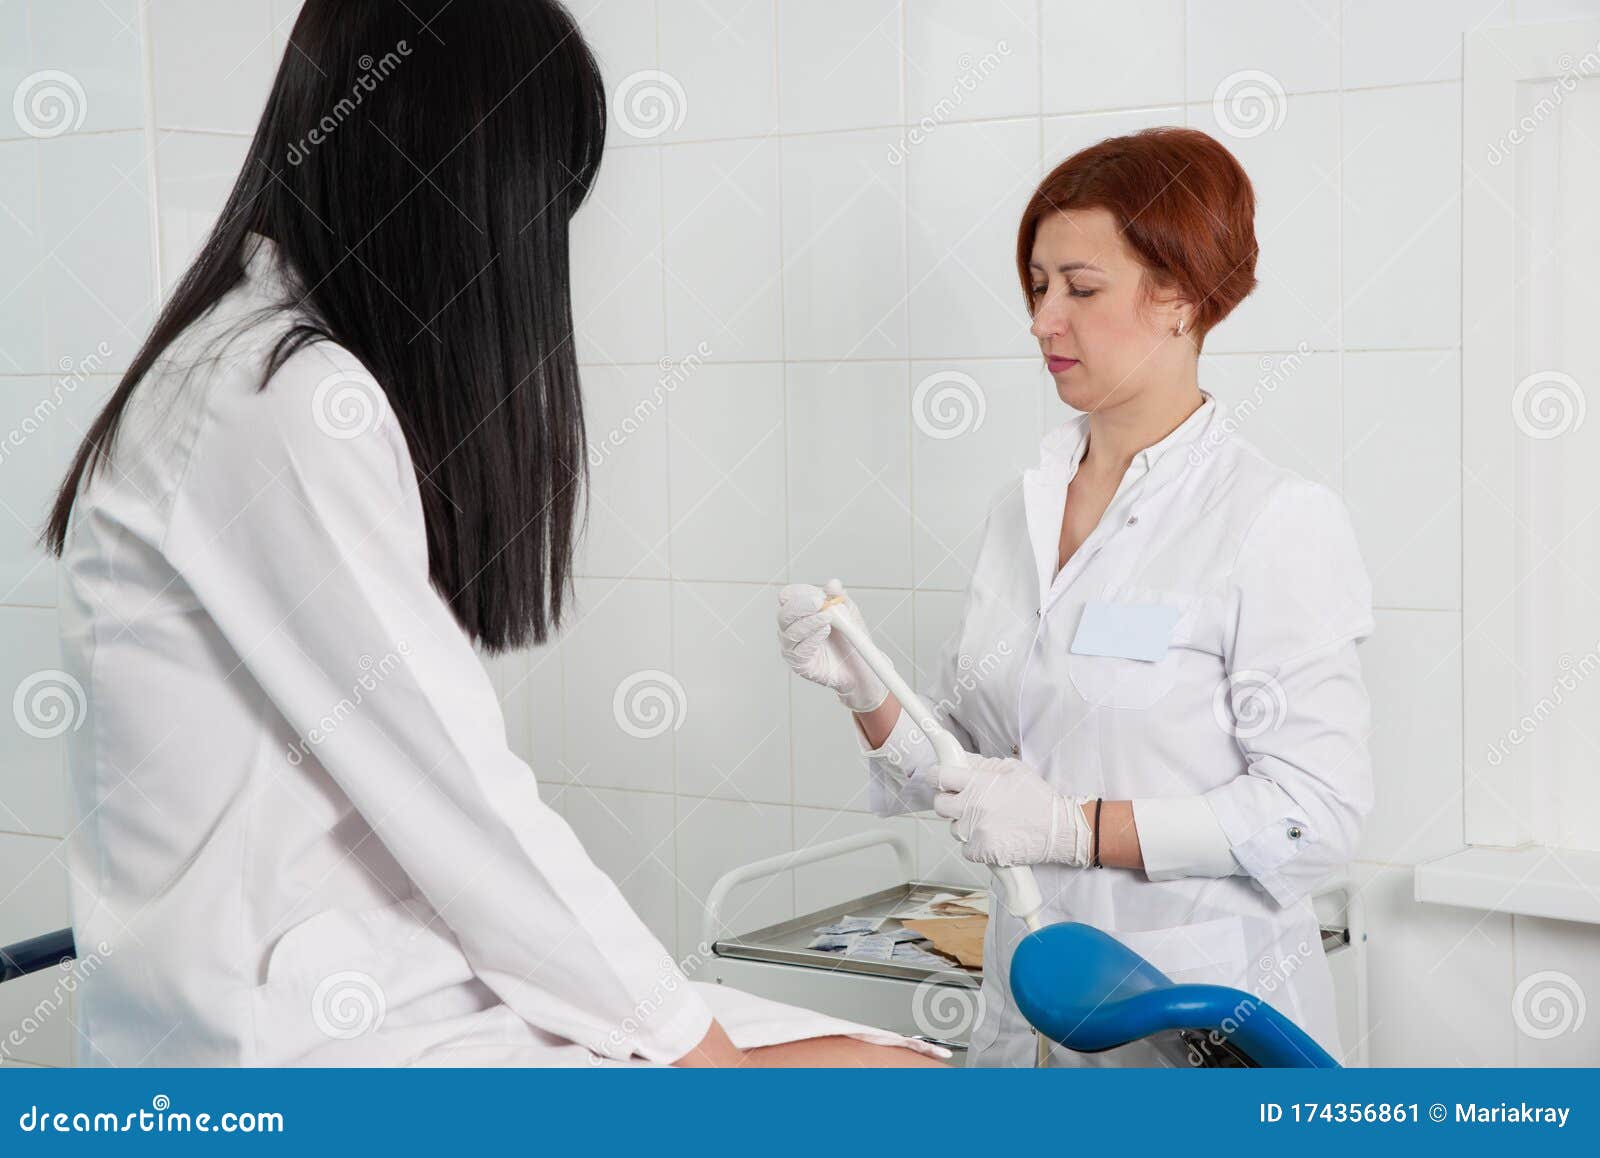 Негритянка у гинеколога. Осмотр в зеркалах гинекология. Палка УЗИ осмотр гинеколога. Зеркало для пациента. Палка для УЗИ В гинекологии фото.